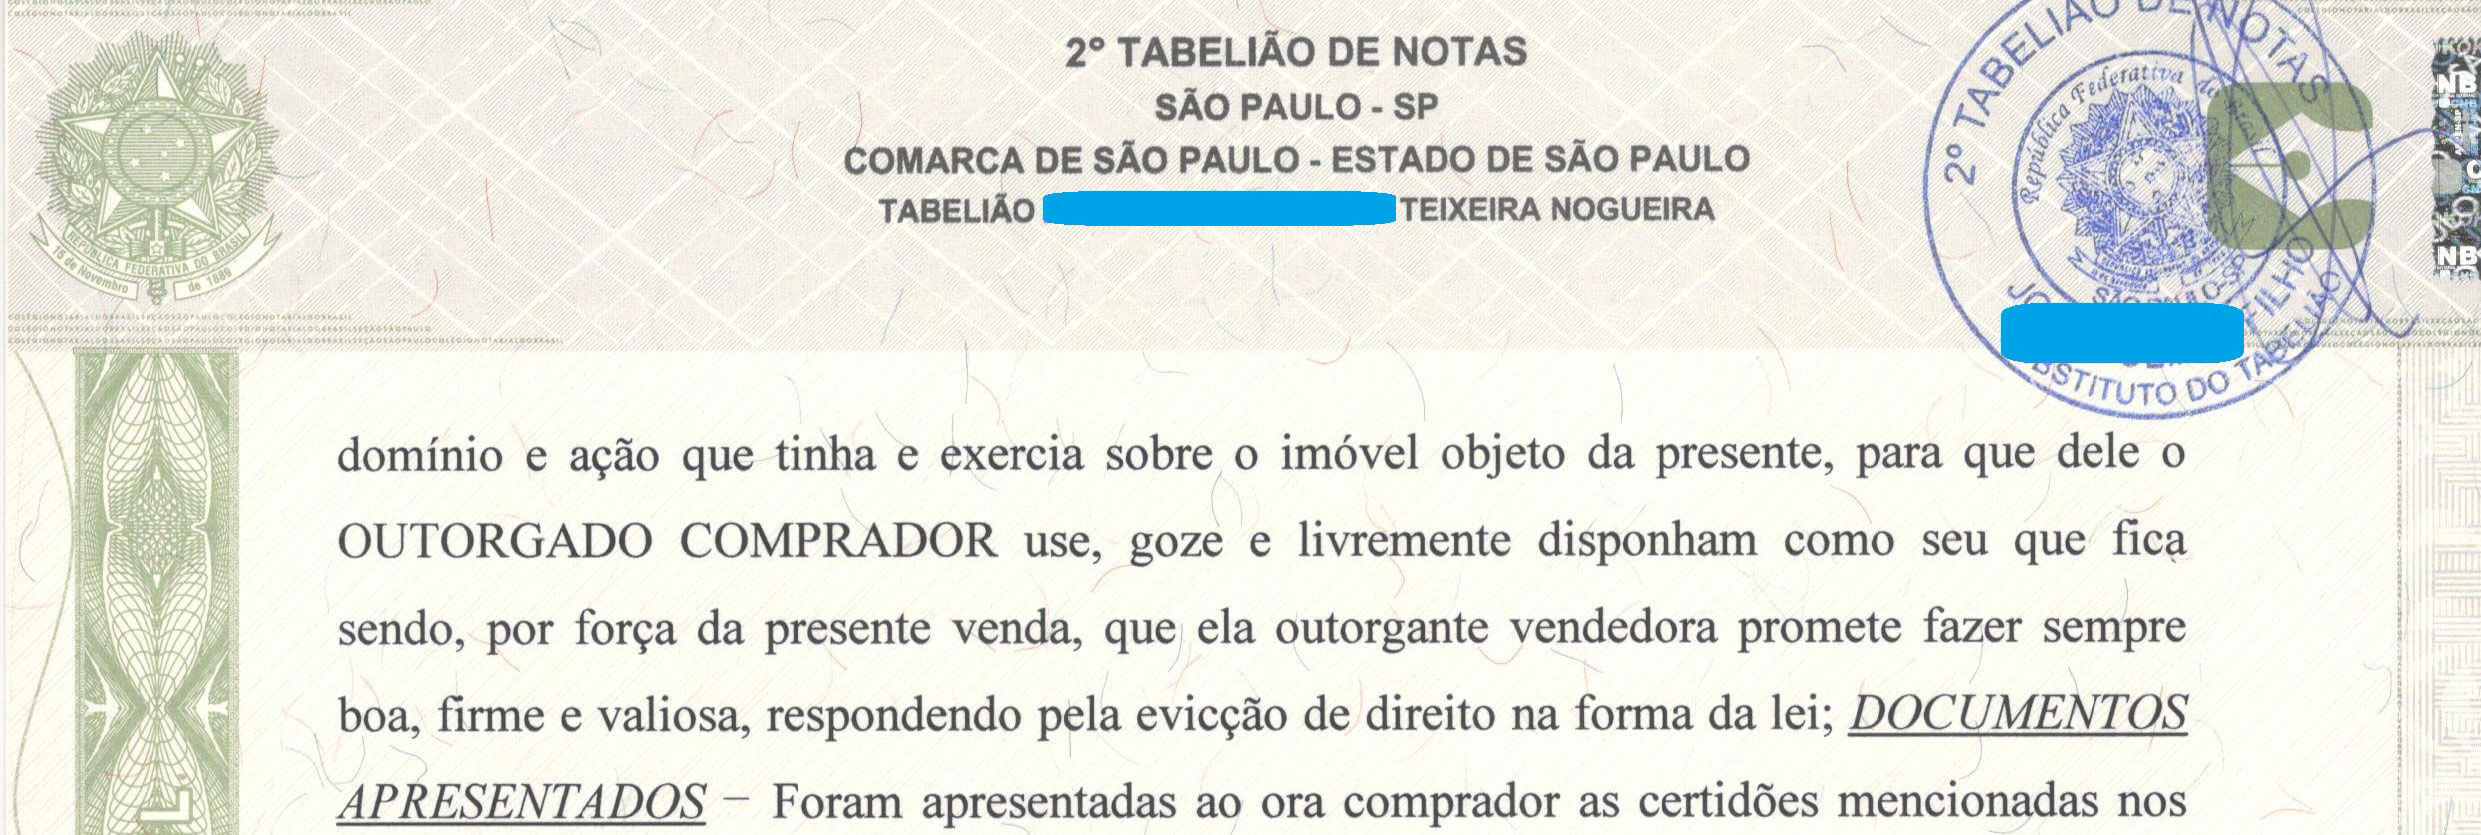 obtain property records in brazil